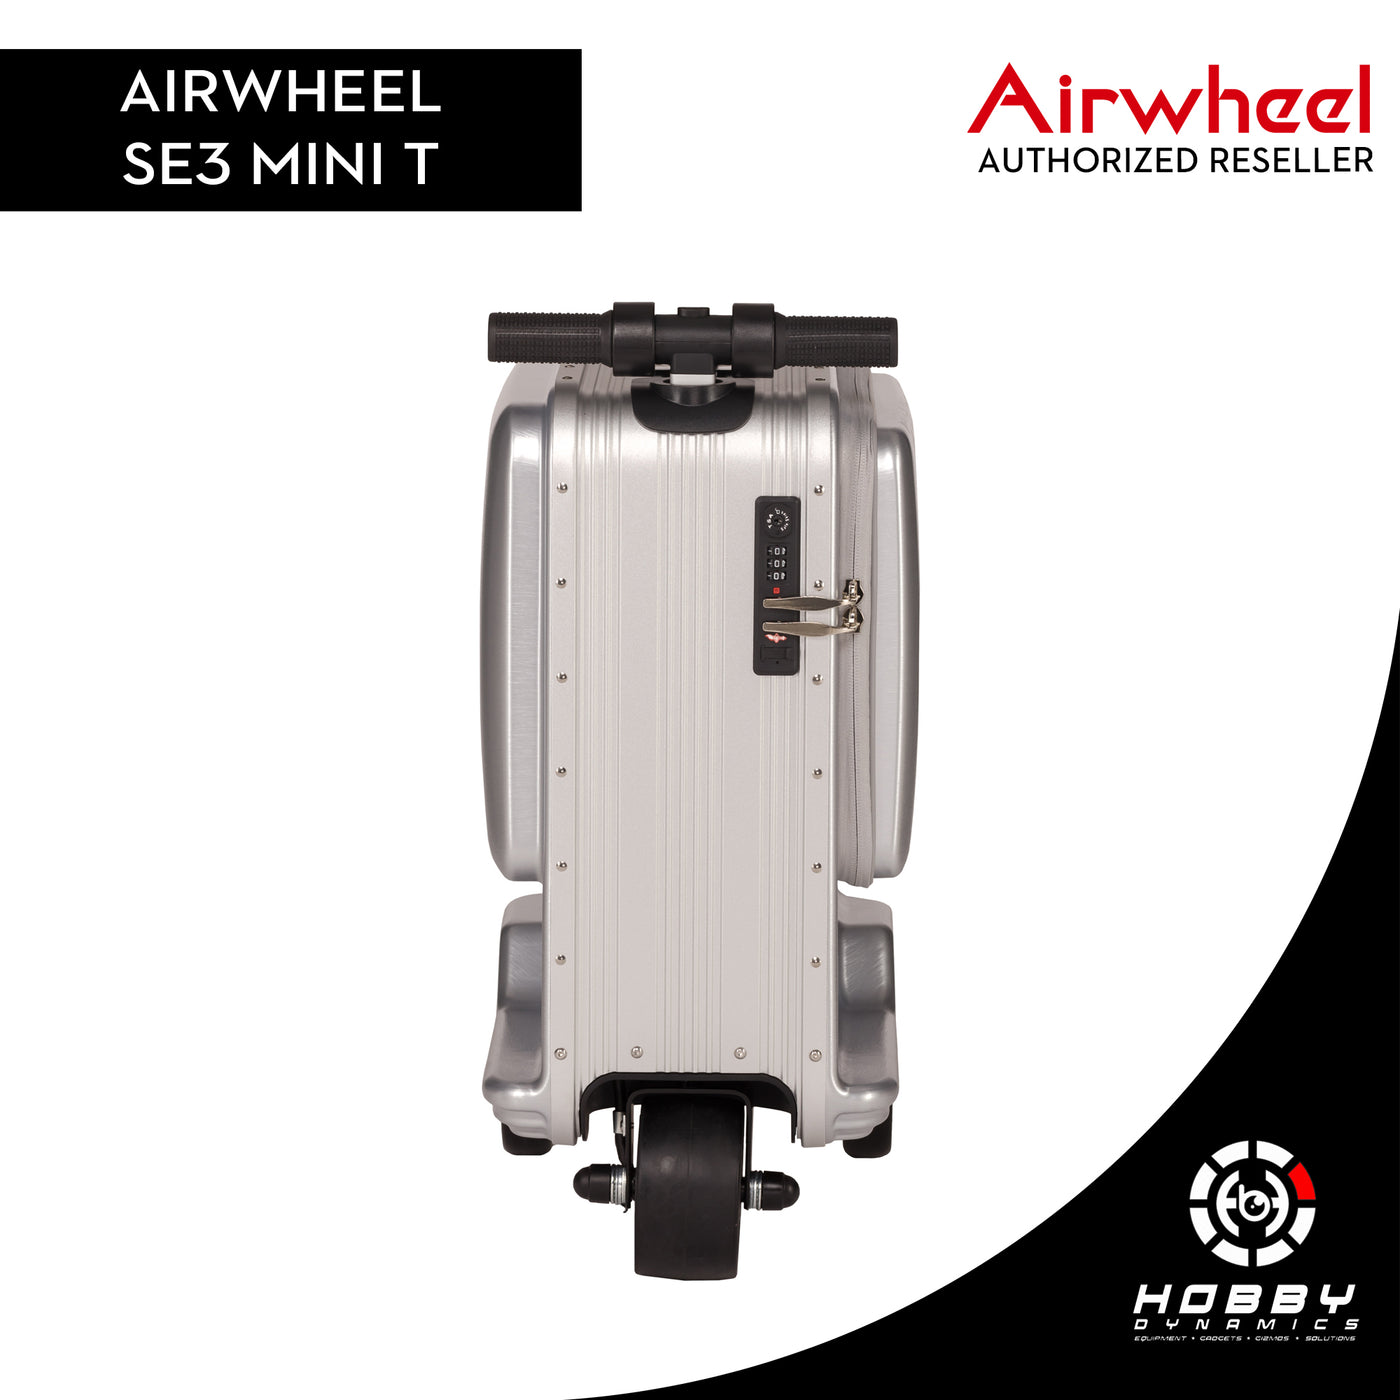 Airwheel SE3 MiniT Smart Luggage